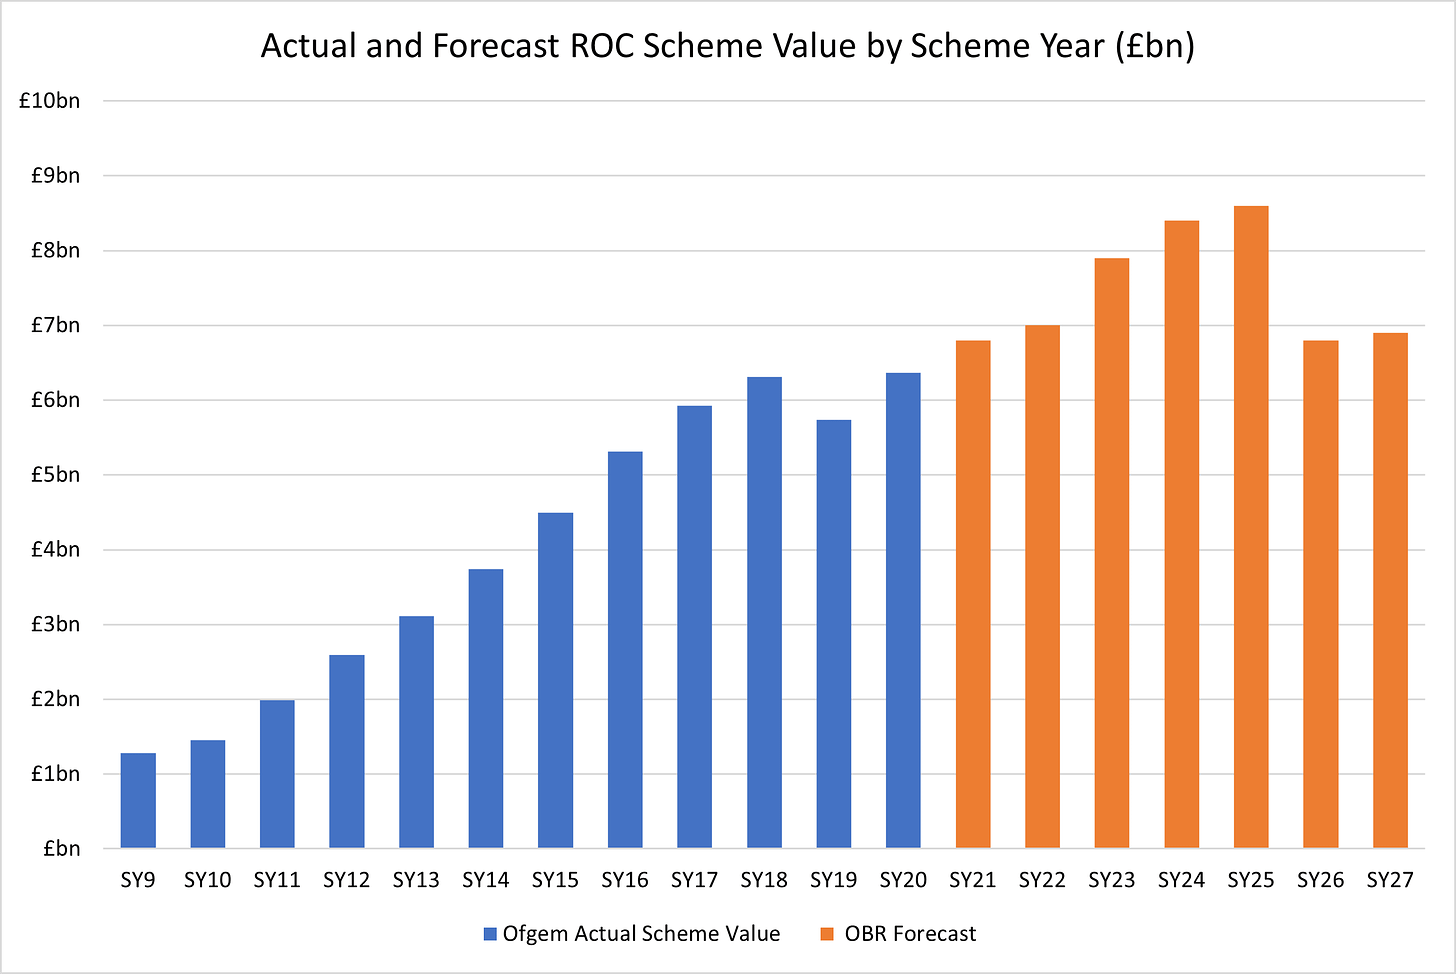 Figure 2 - Actual and Forecast ROC Scheme Value by Scheme Year (£bn)